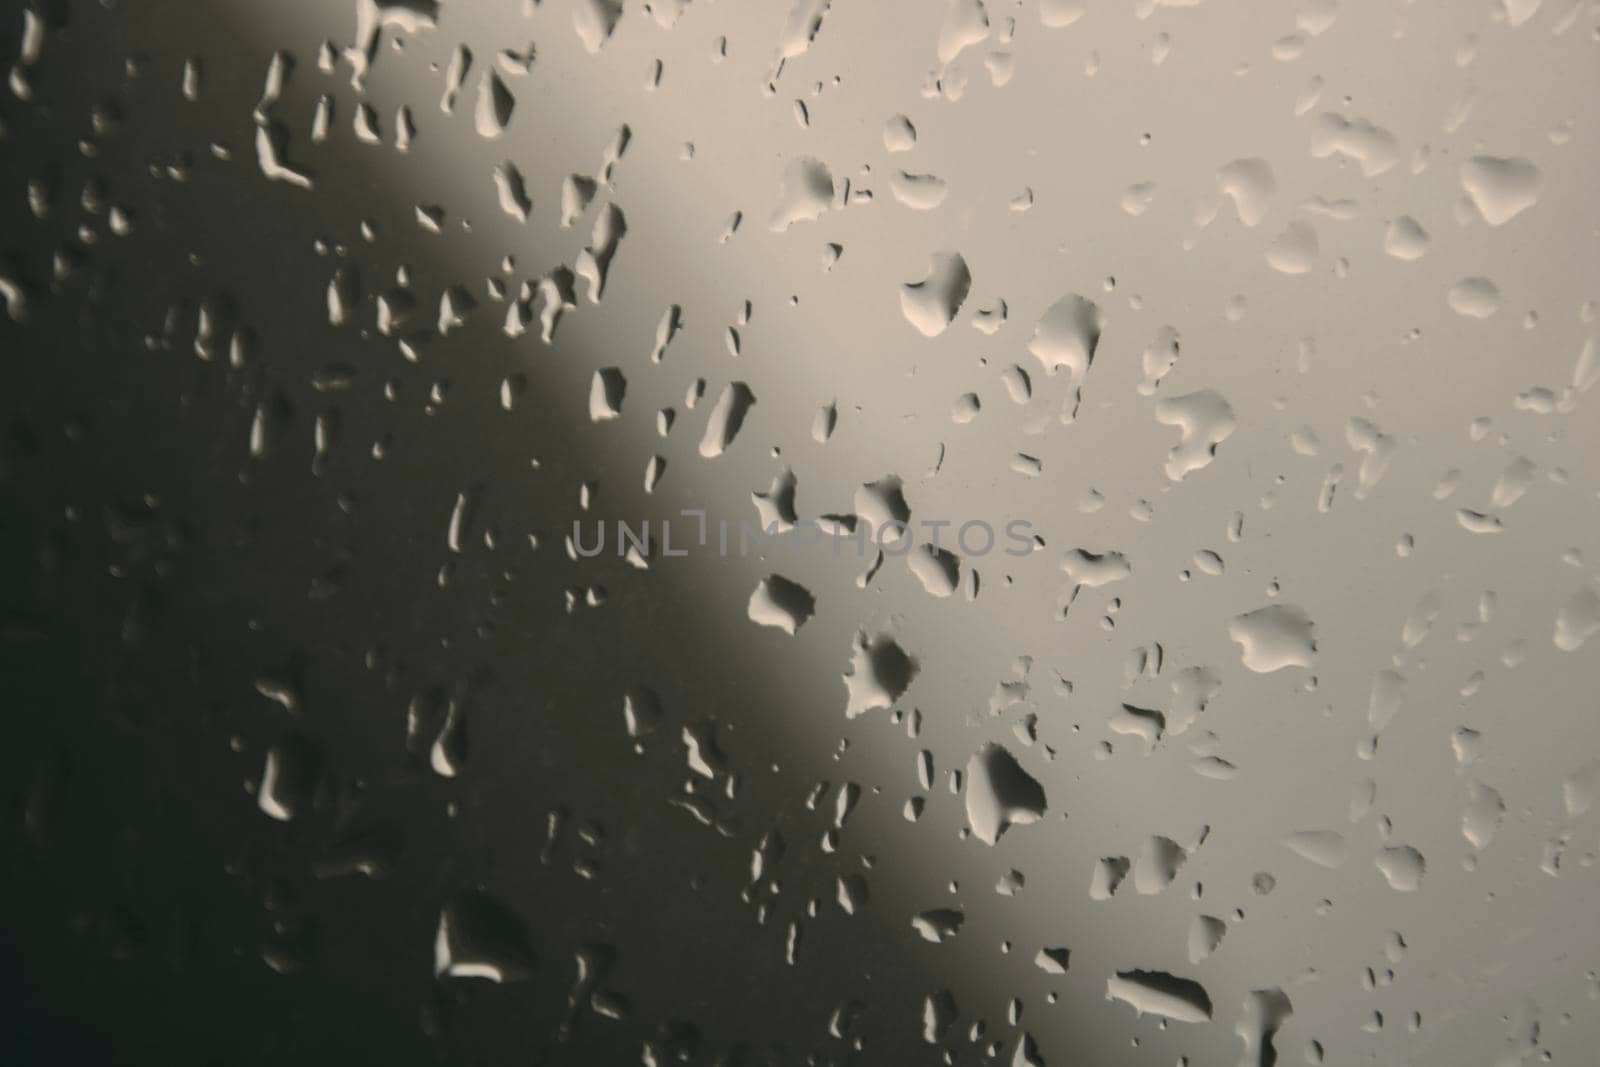 Wet window full of water drops by ValentimePix